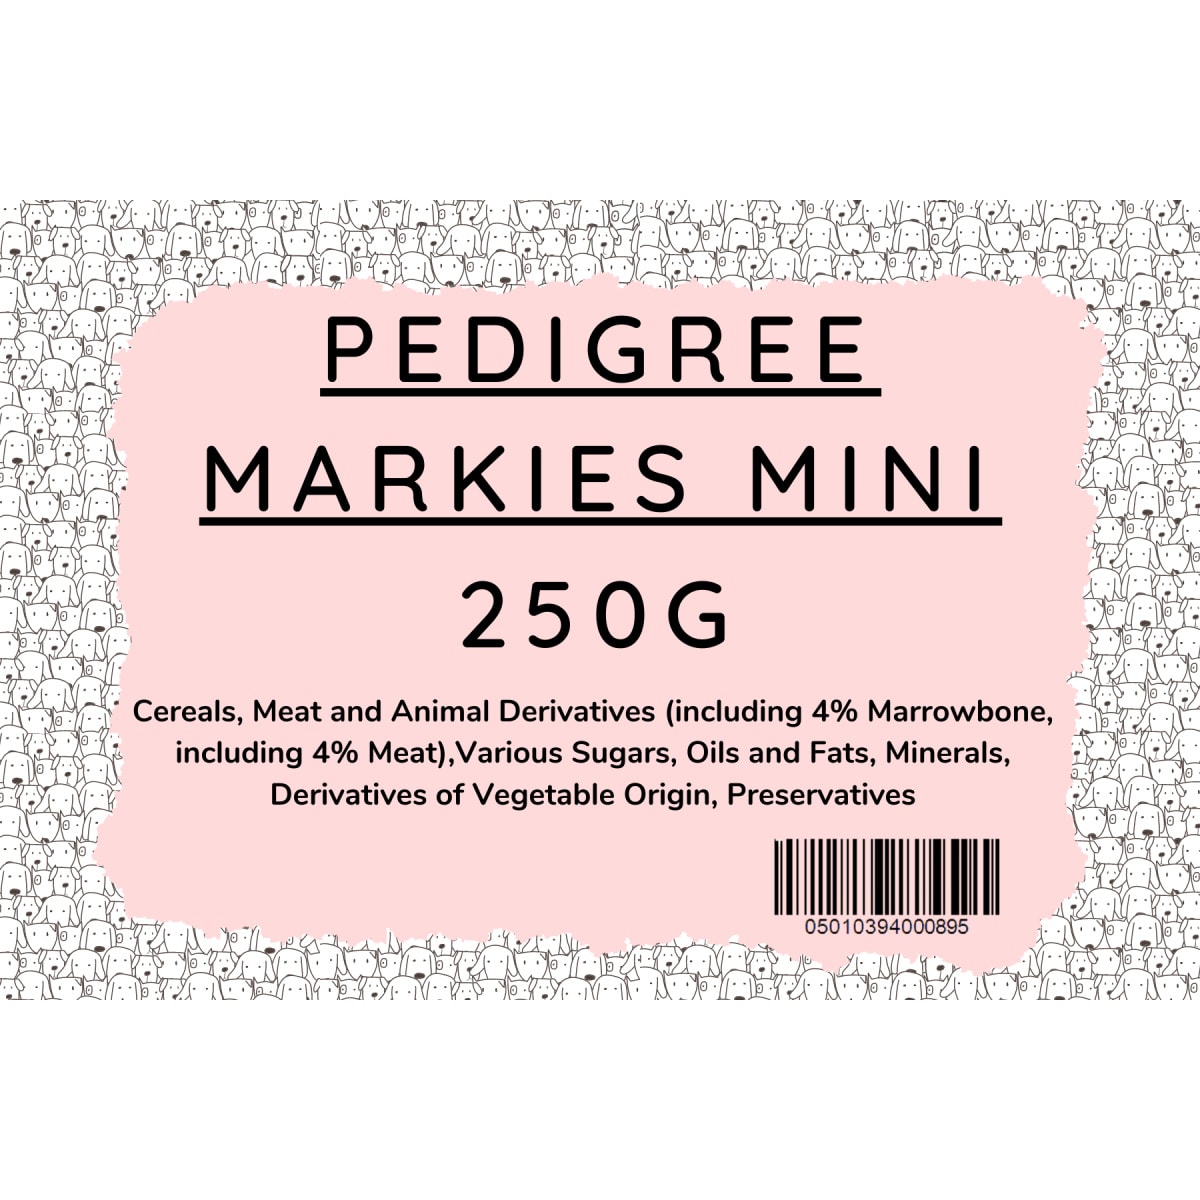 Pedigree Markies Mini 250g Main Image